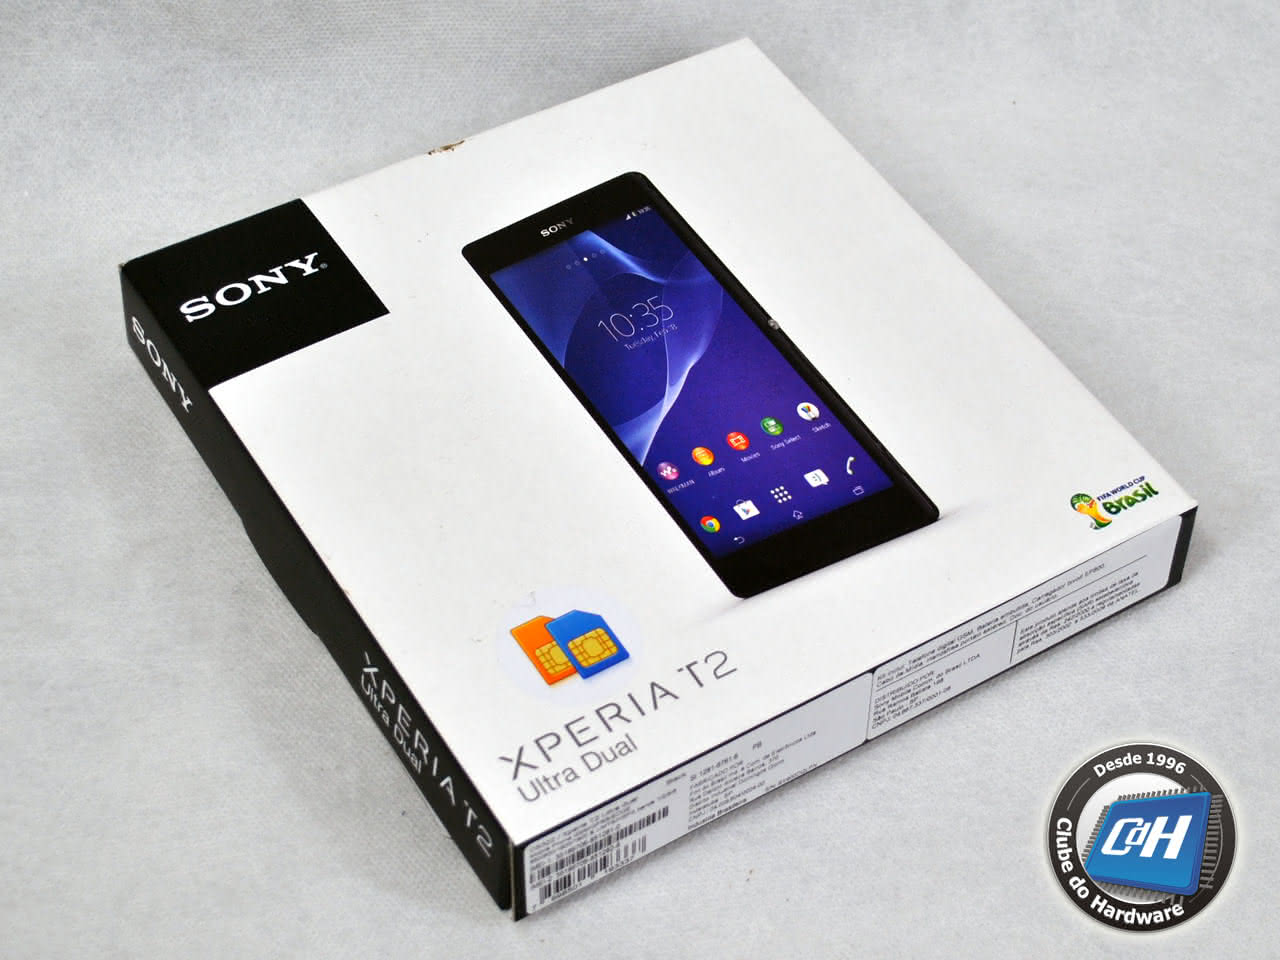 Teste do smartphone Sony Xperia T2 Ultra Dual